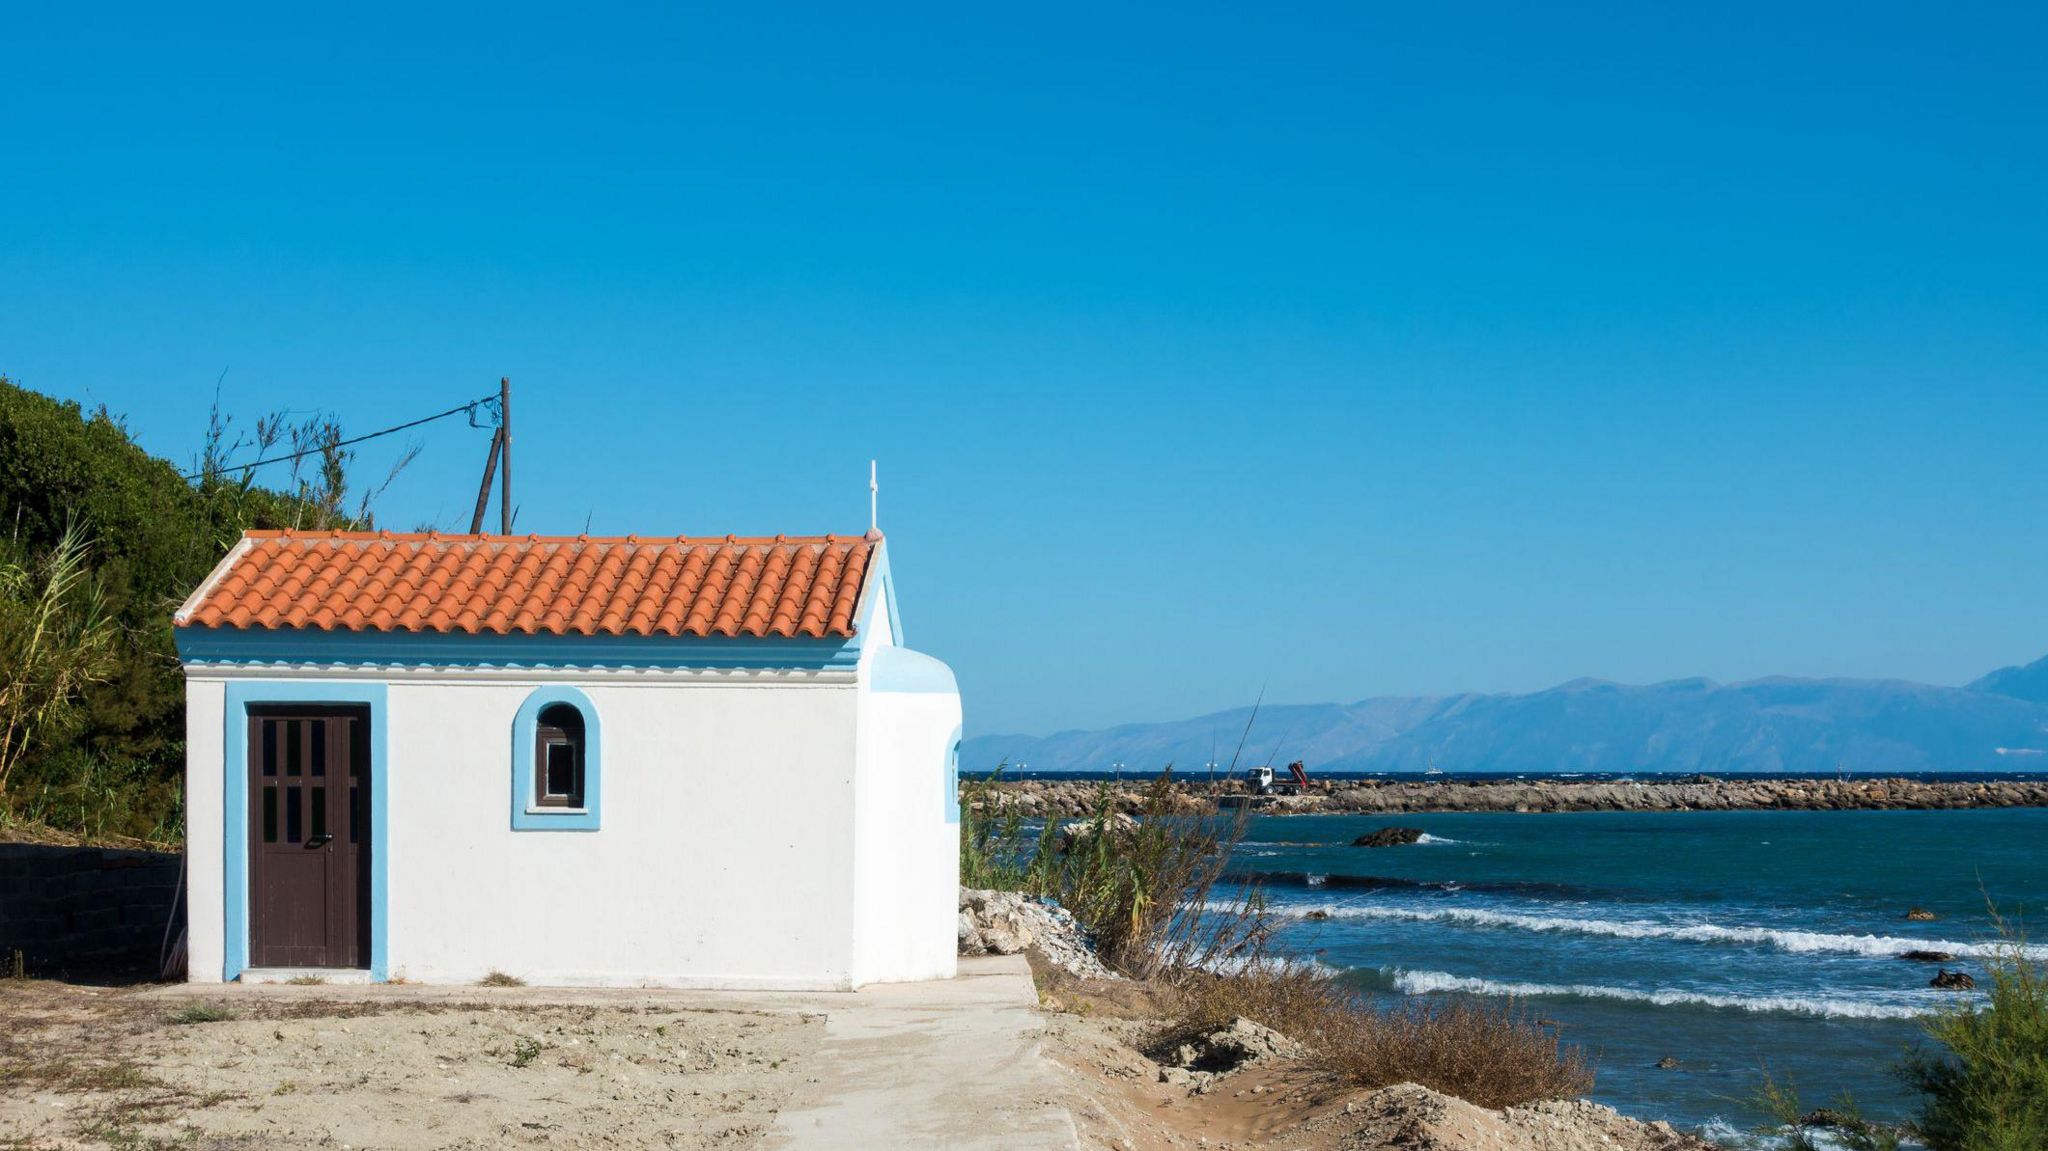 A small church on the Greek island of Mathraki